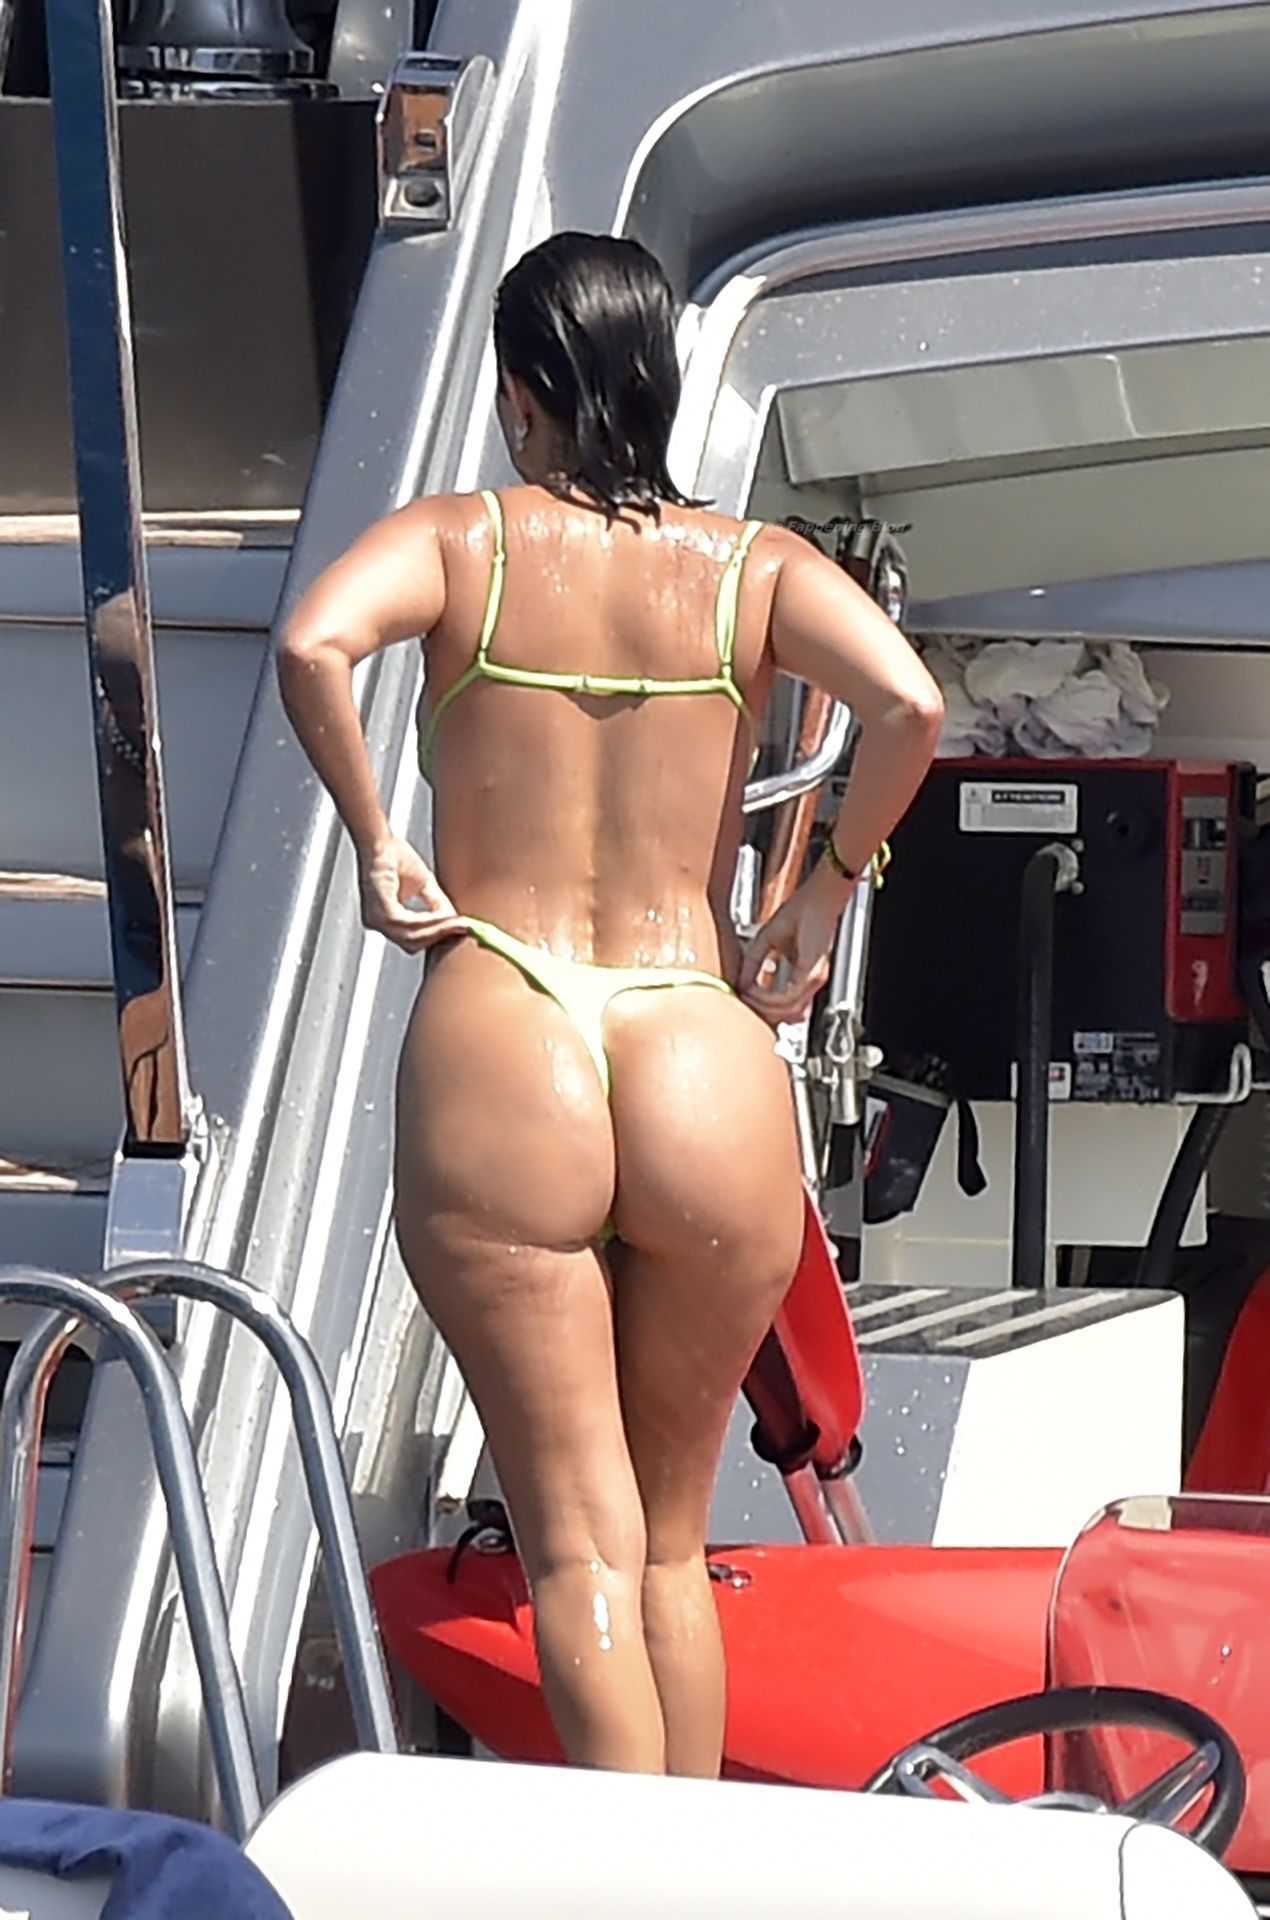 Epic Ass Alert Kourtney Kardashian Showing Her Backside in a Sexy Gallery  image